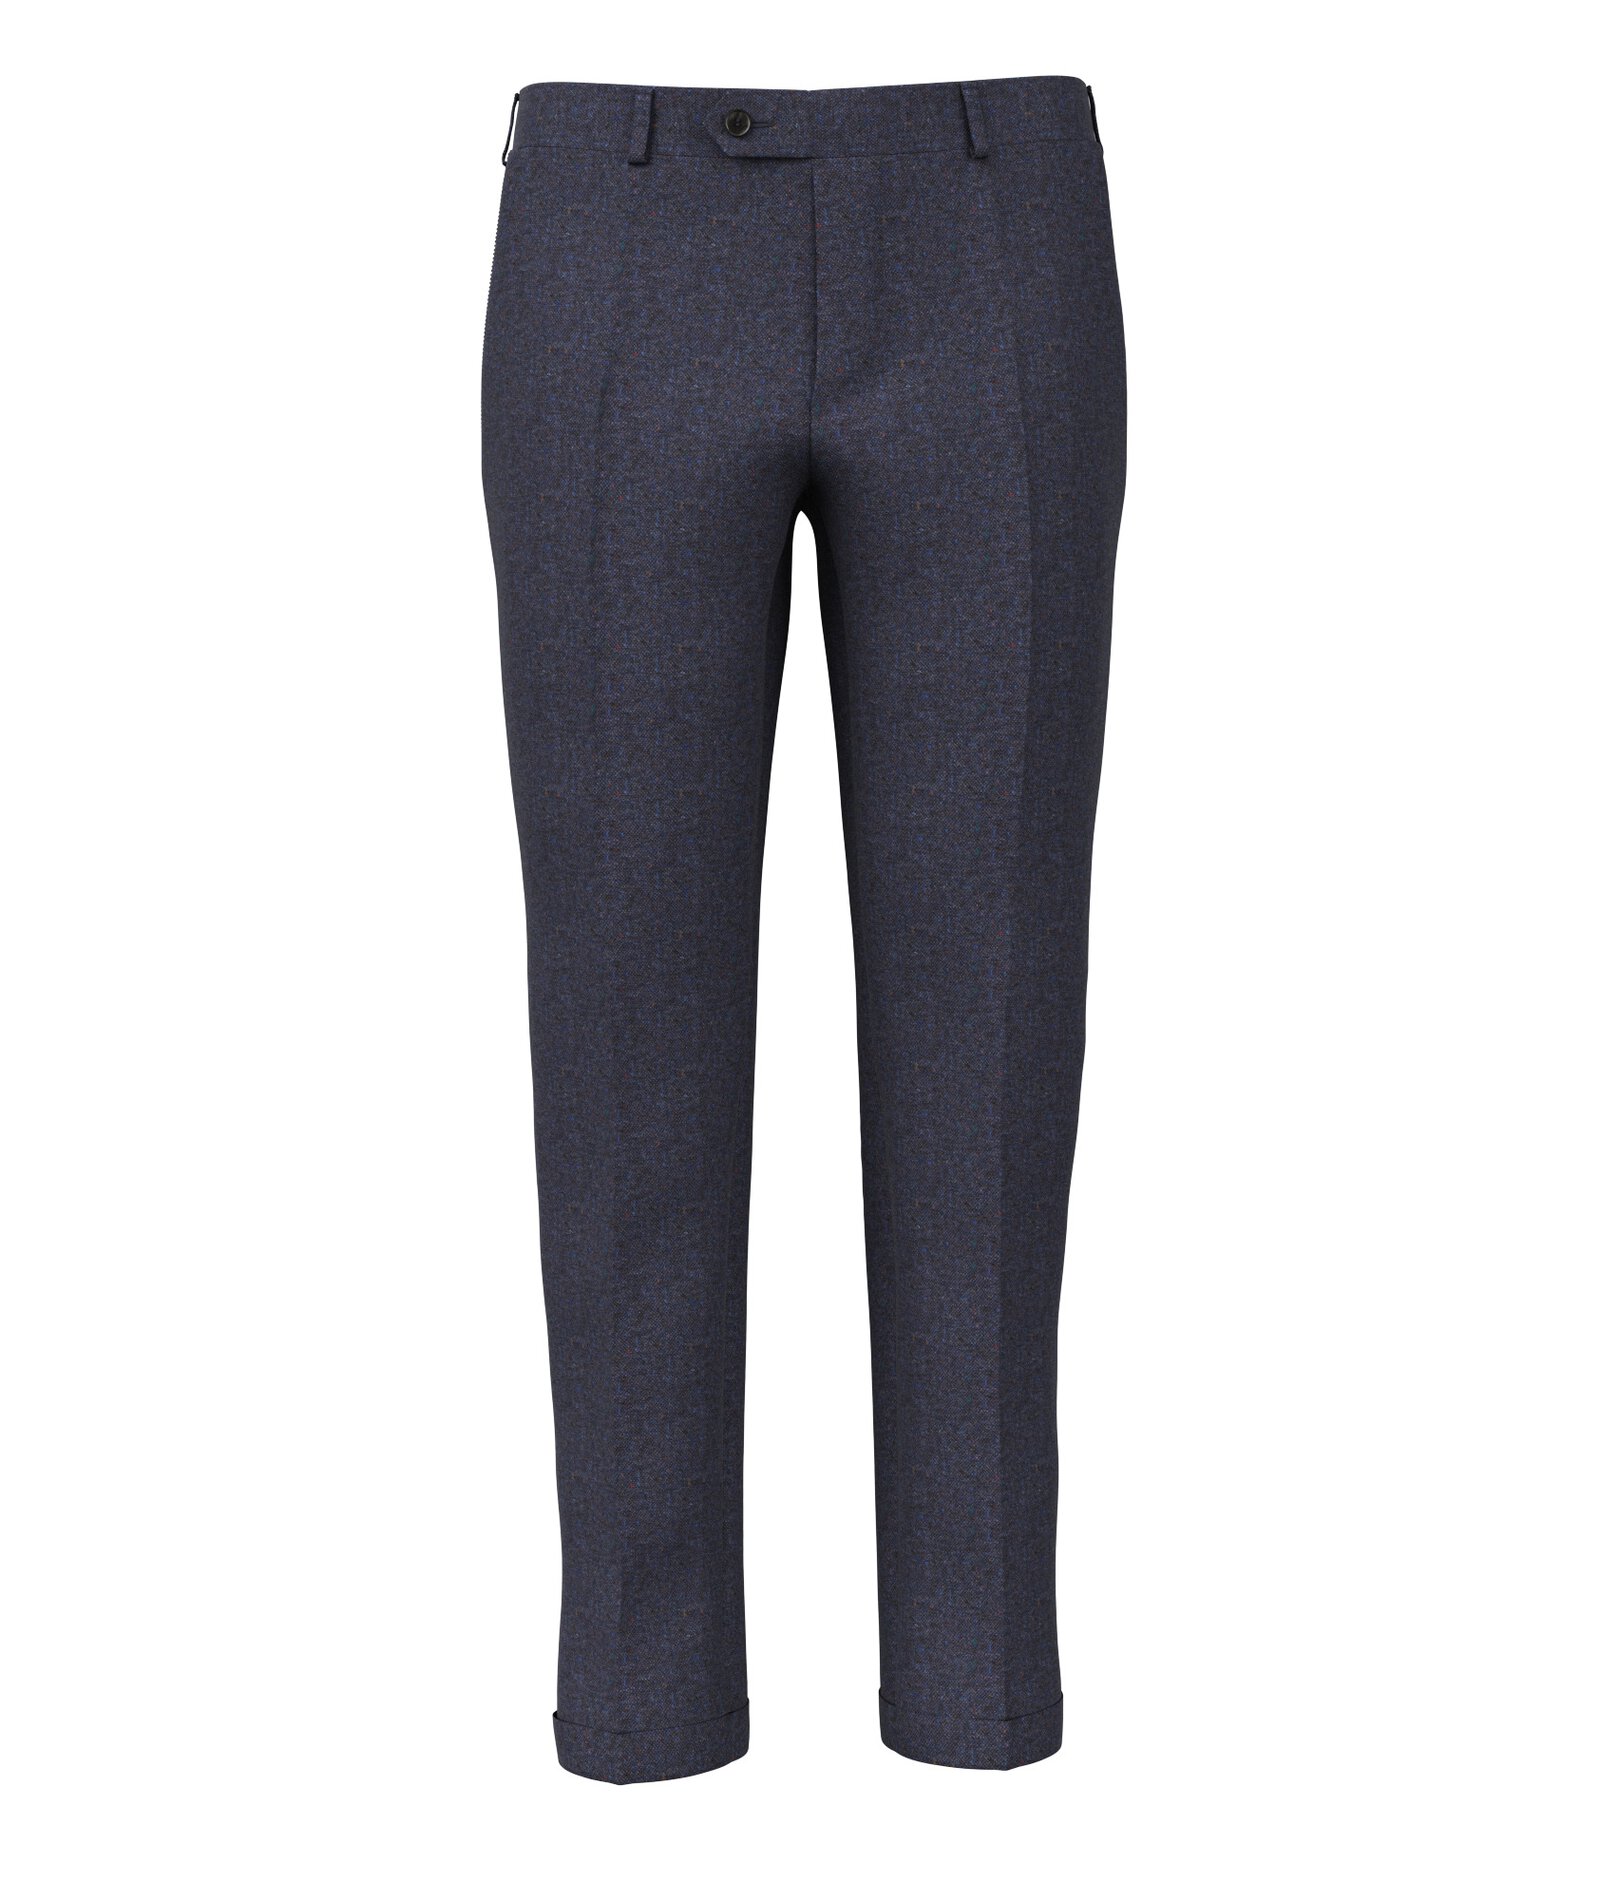 Image of Pantaloni da uomo su misura, Bottoli, Blu in Knickerbocker di Lana, Autunno Inverno | Lanieri